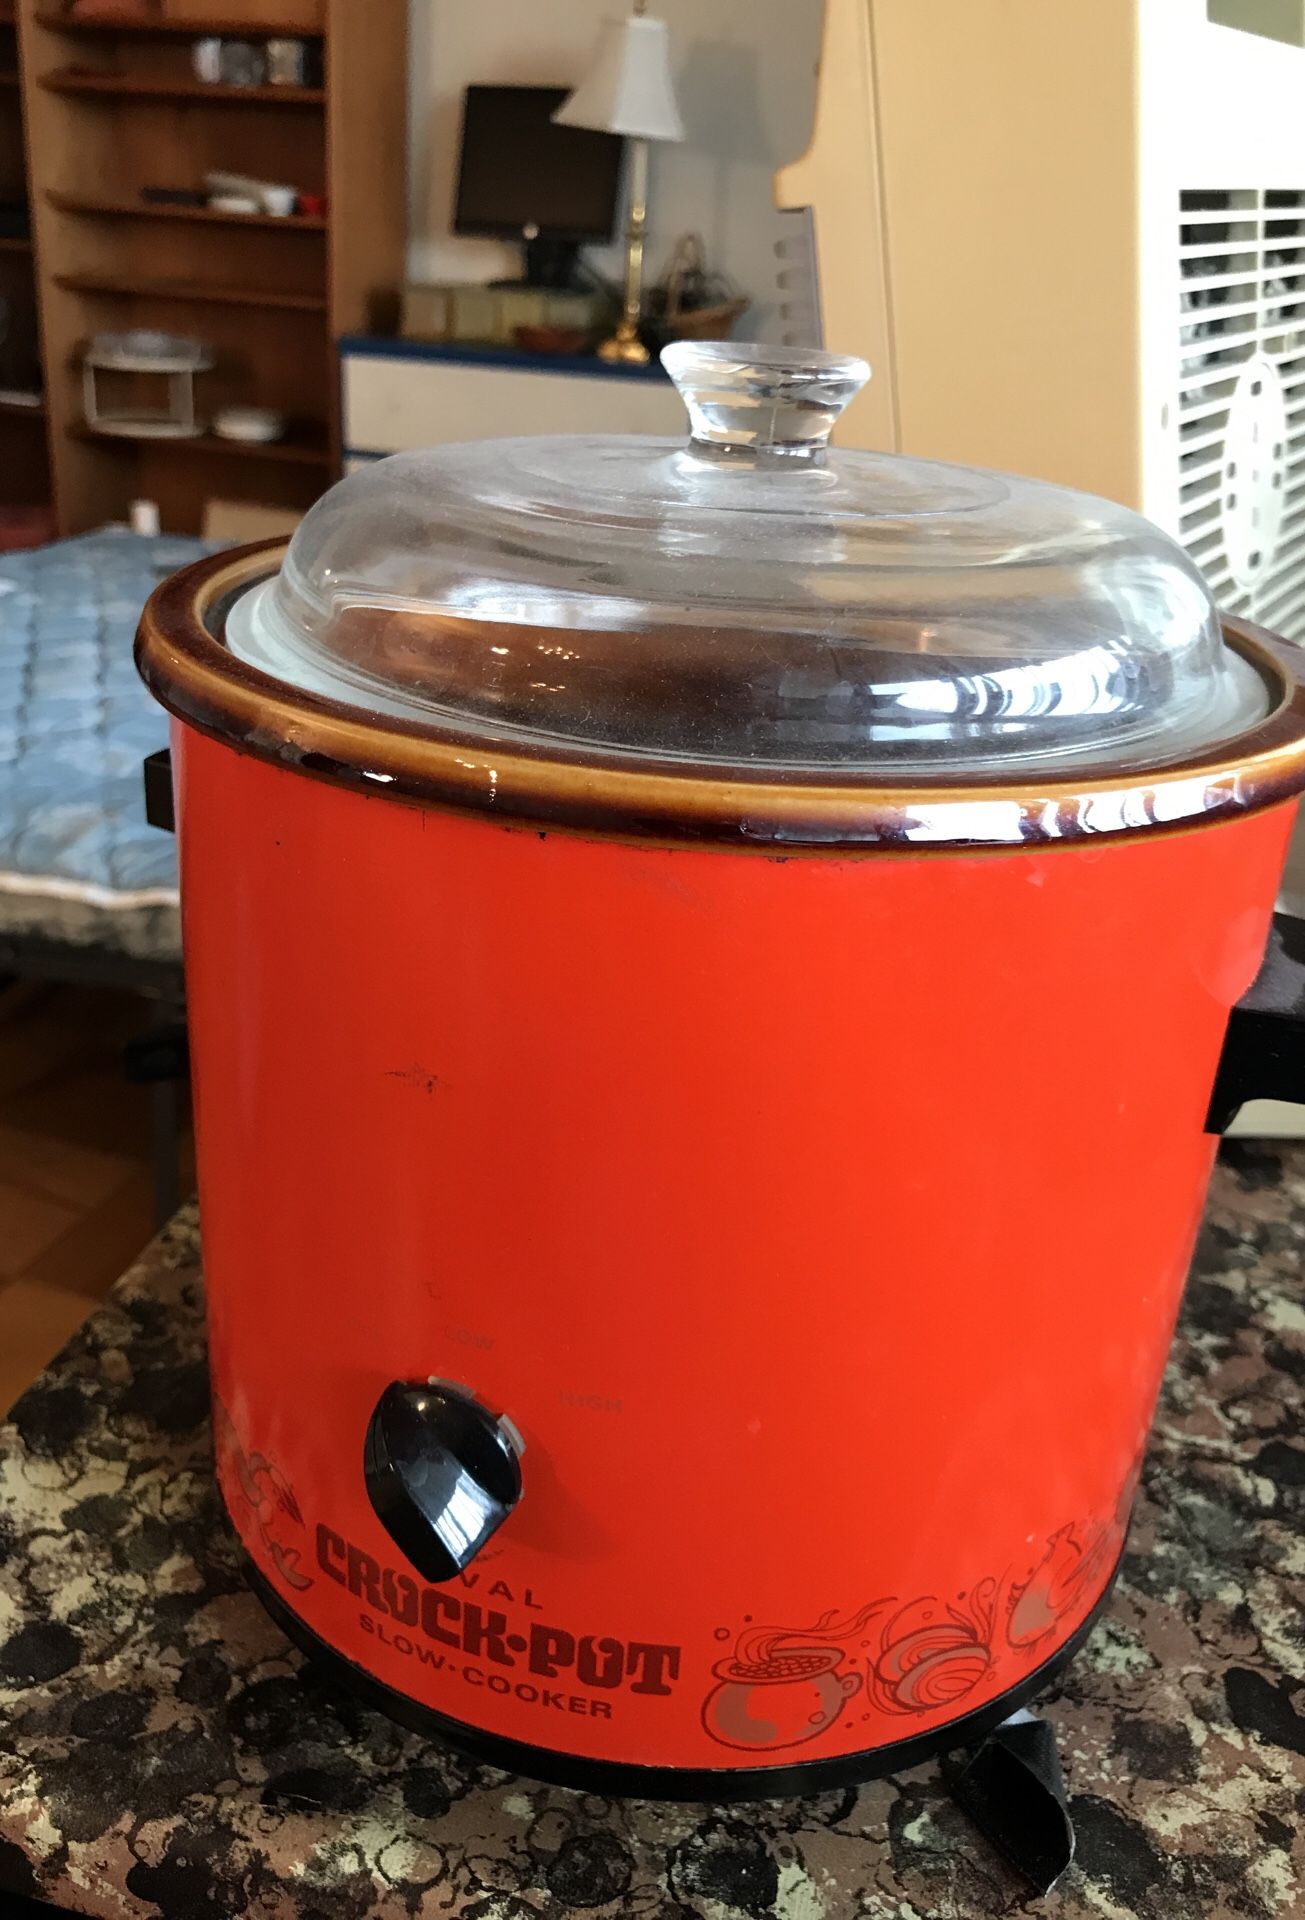 Retro orange Crockpot